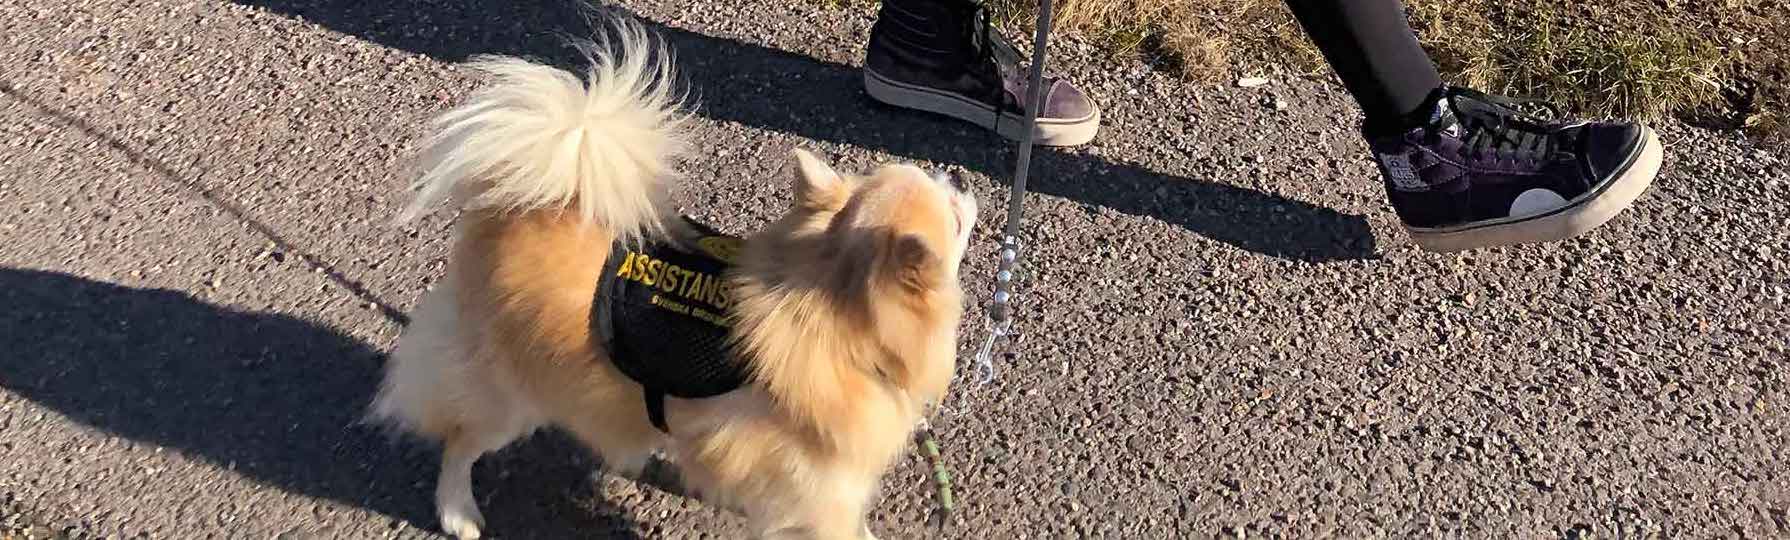 World's smallest medical detection dog